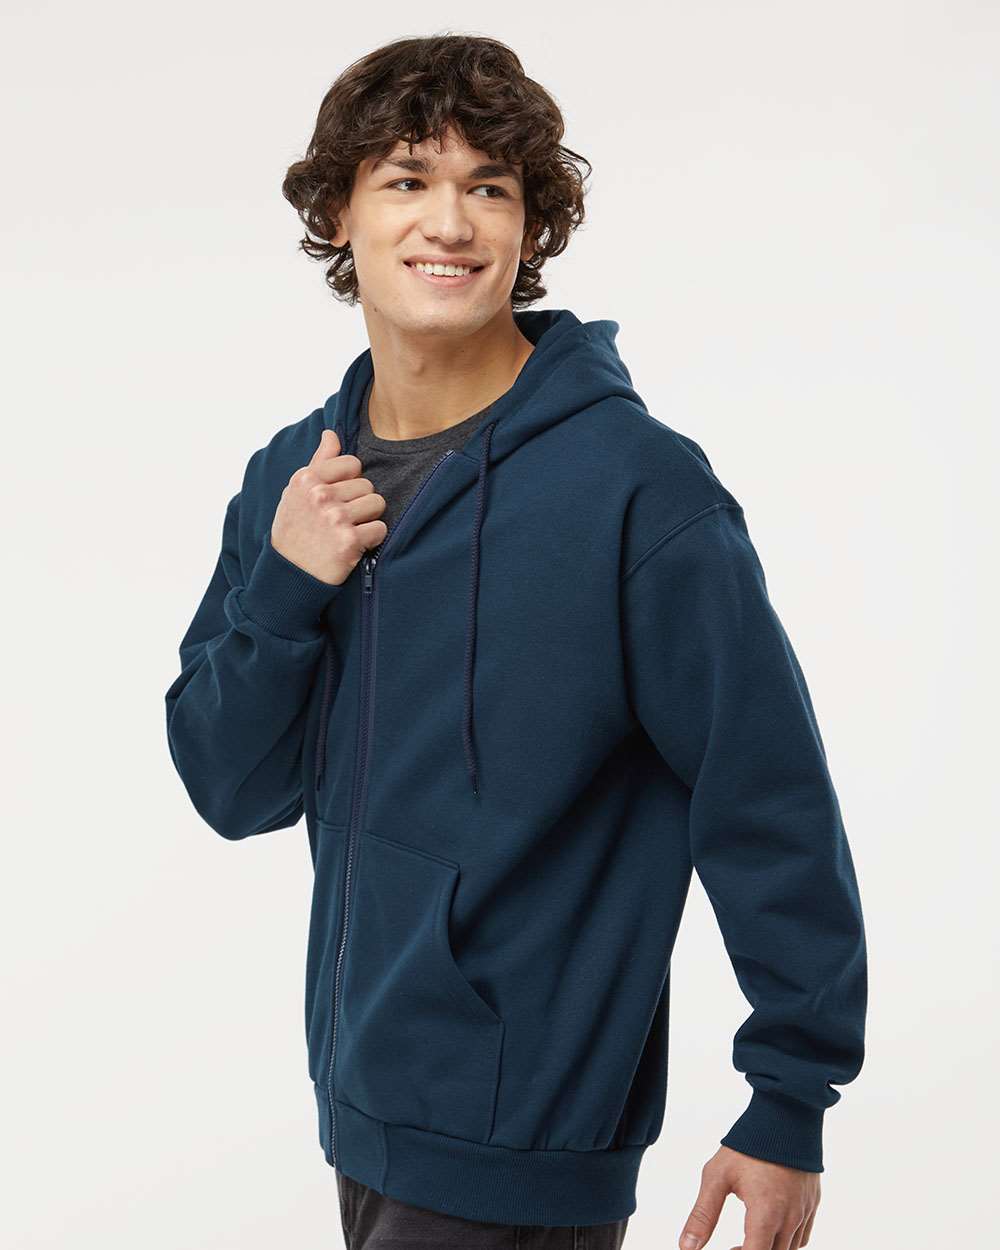 King Fashion Full-Zip Hooded Sweatshirt KF9017 #colormdl_Navy